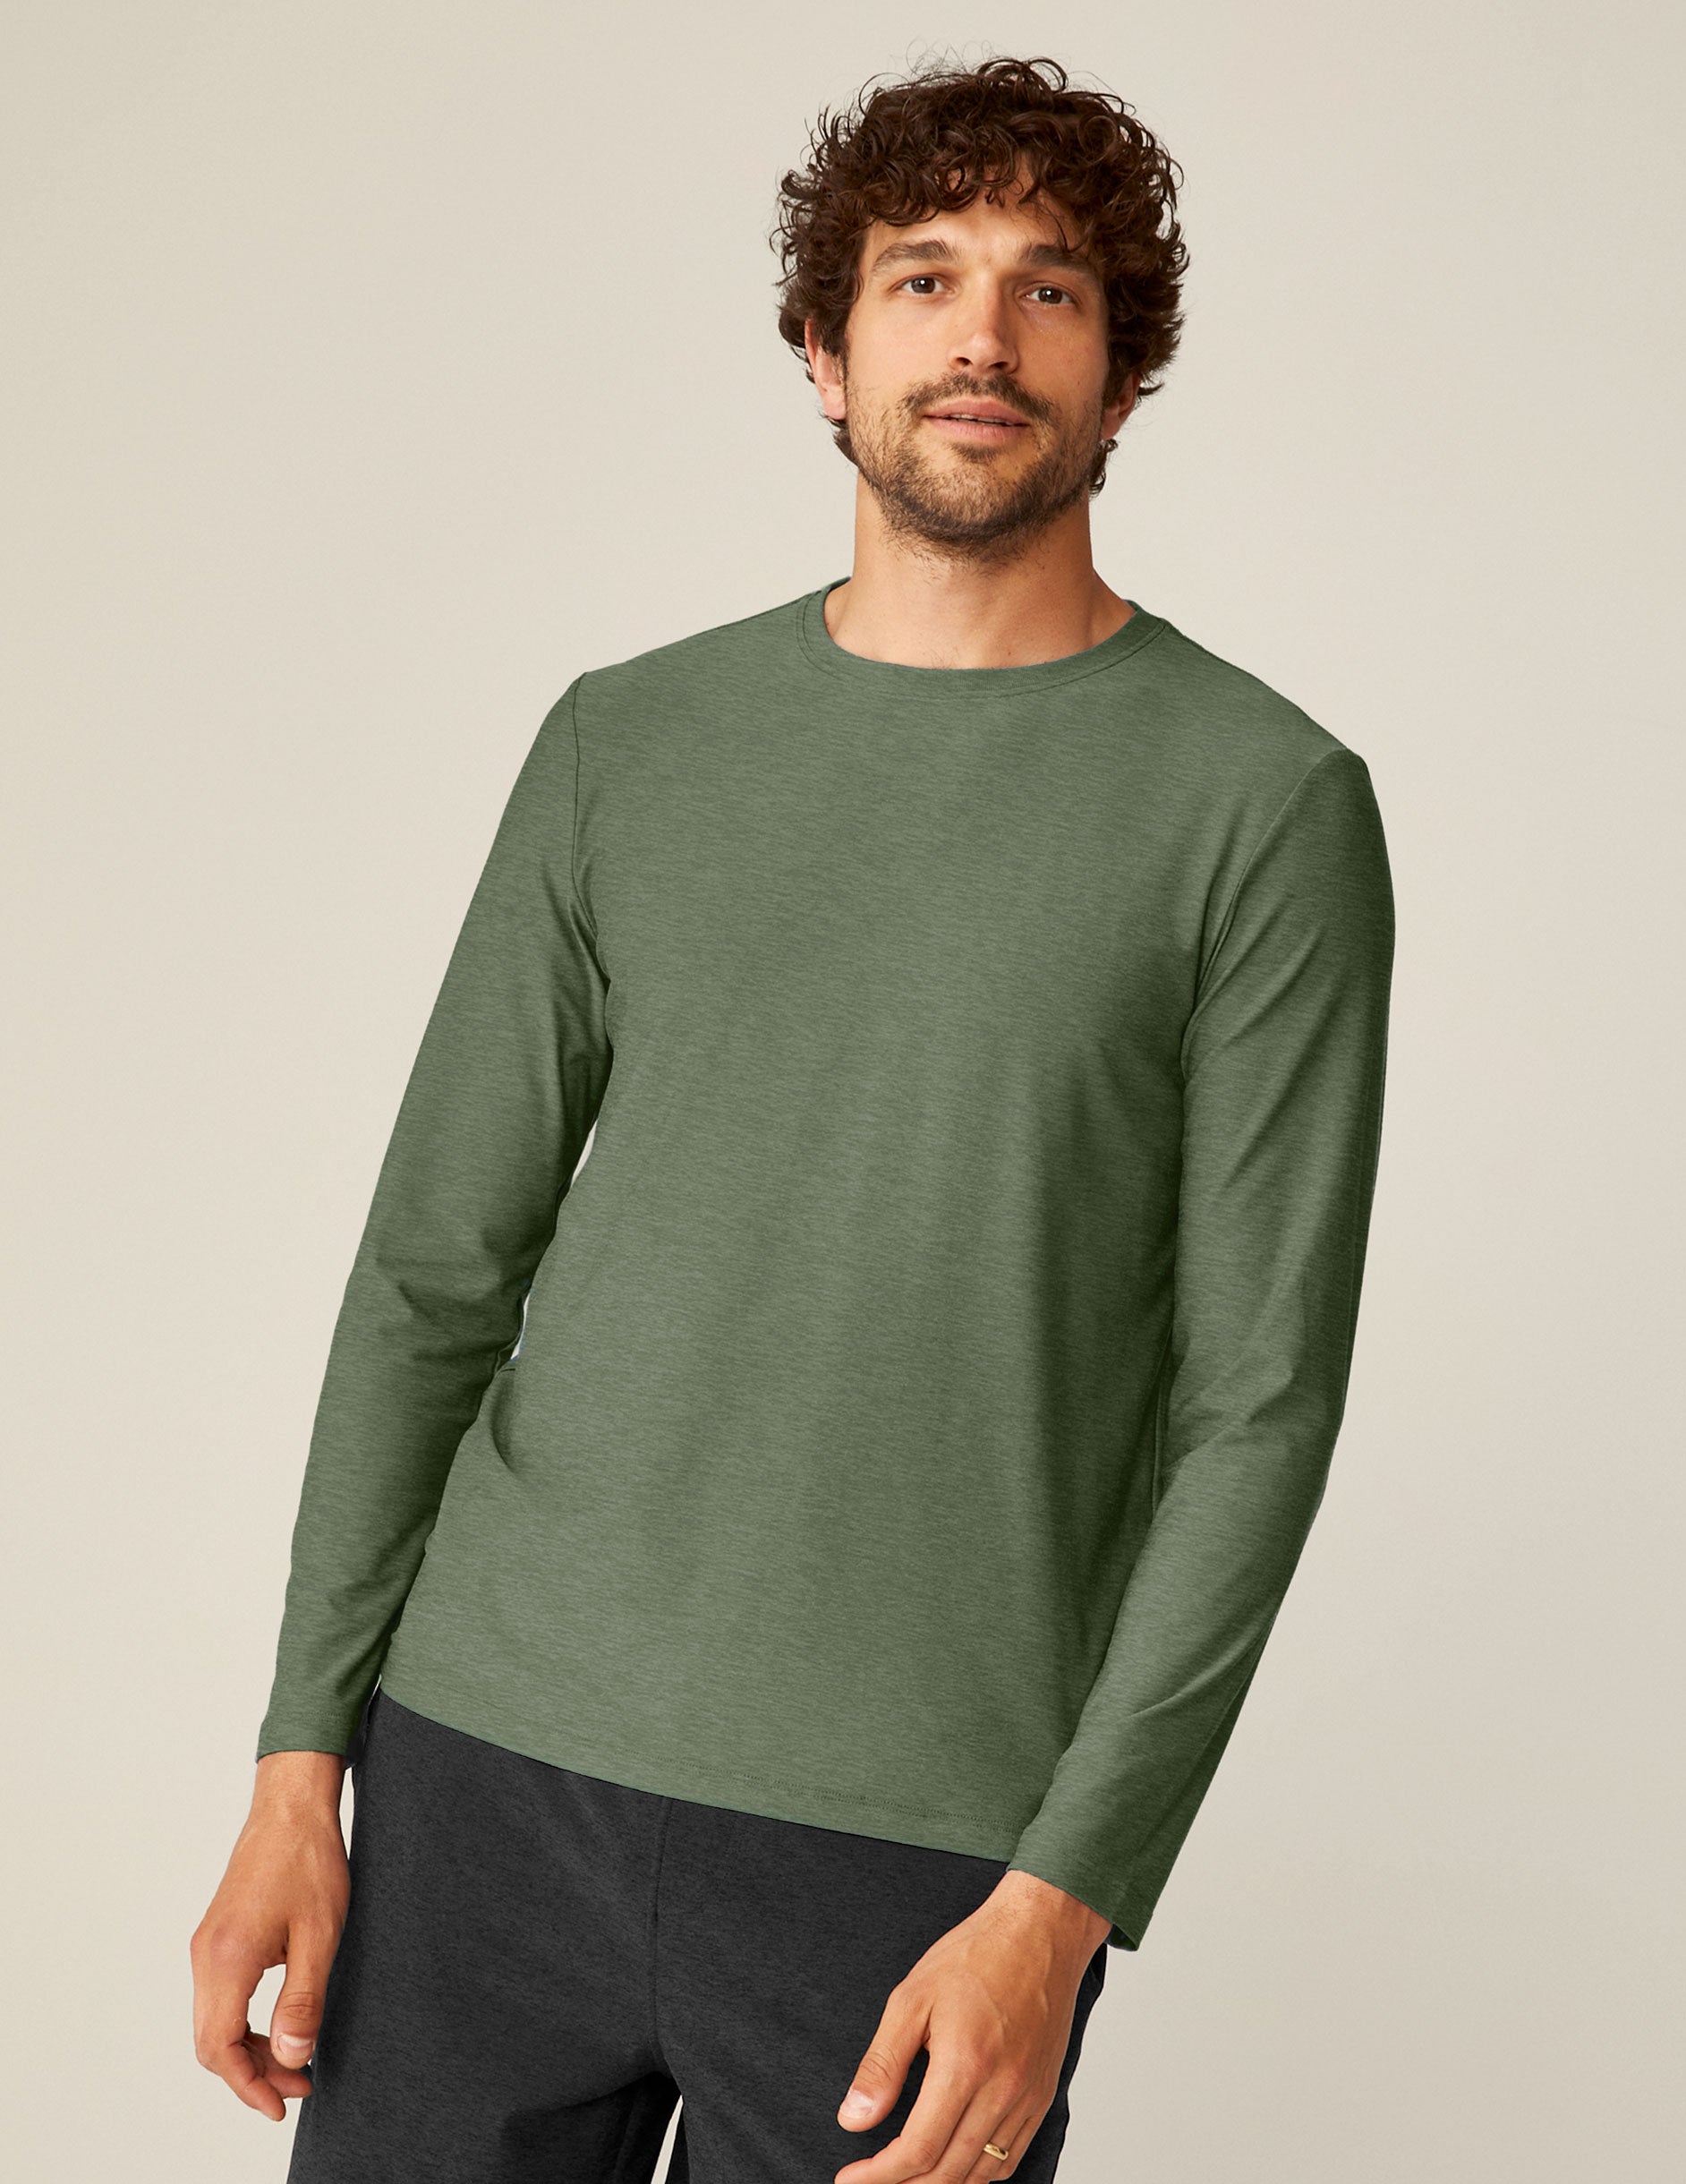 green mens long sleeve shirt.